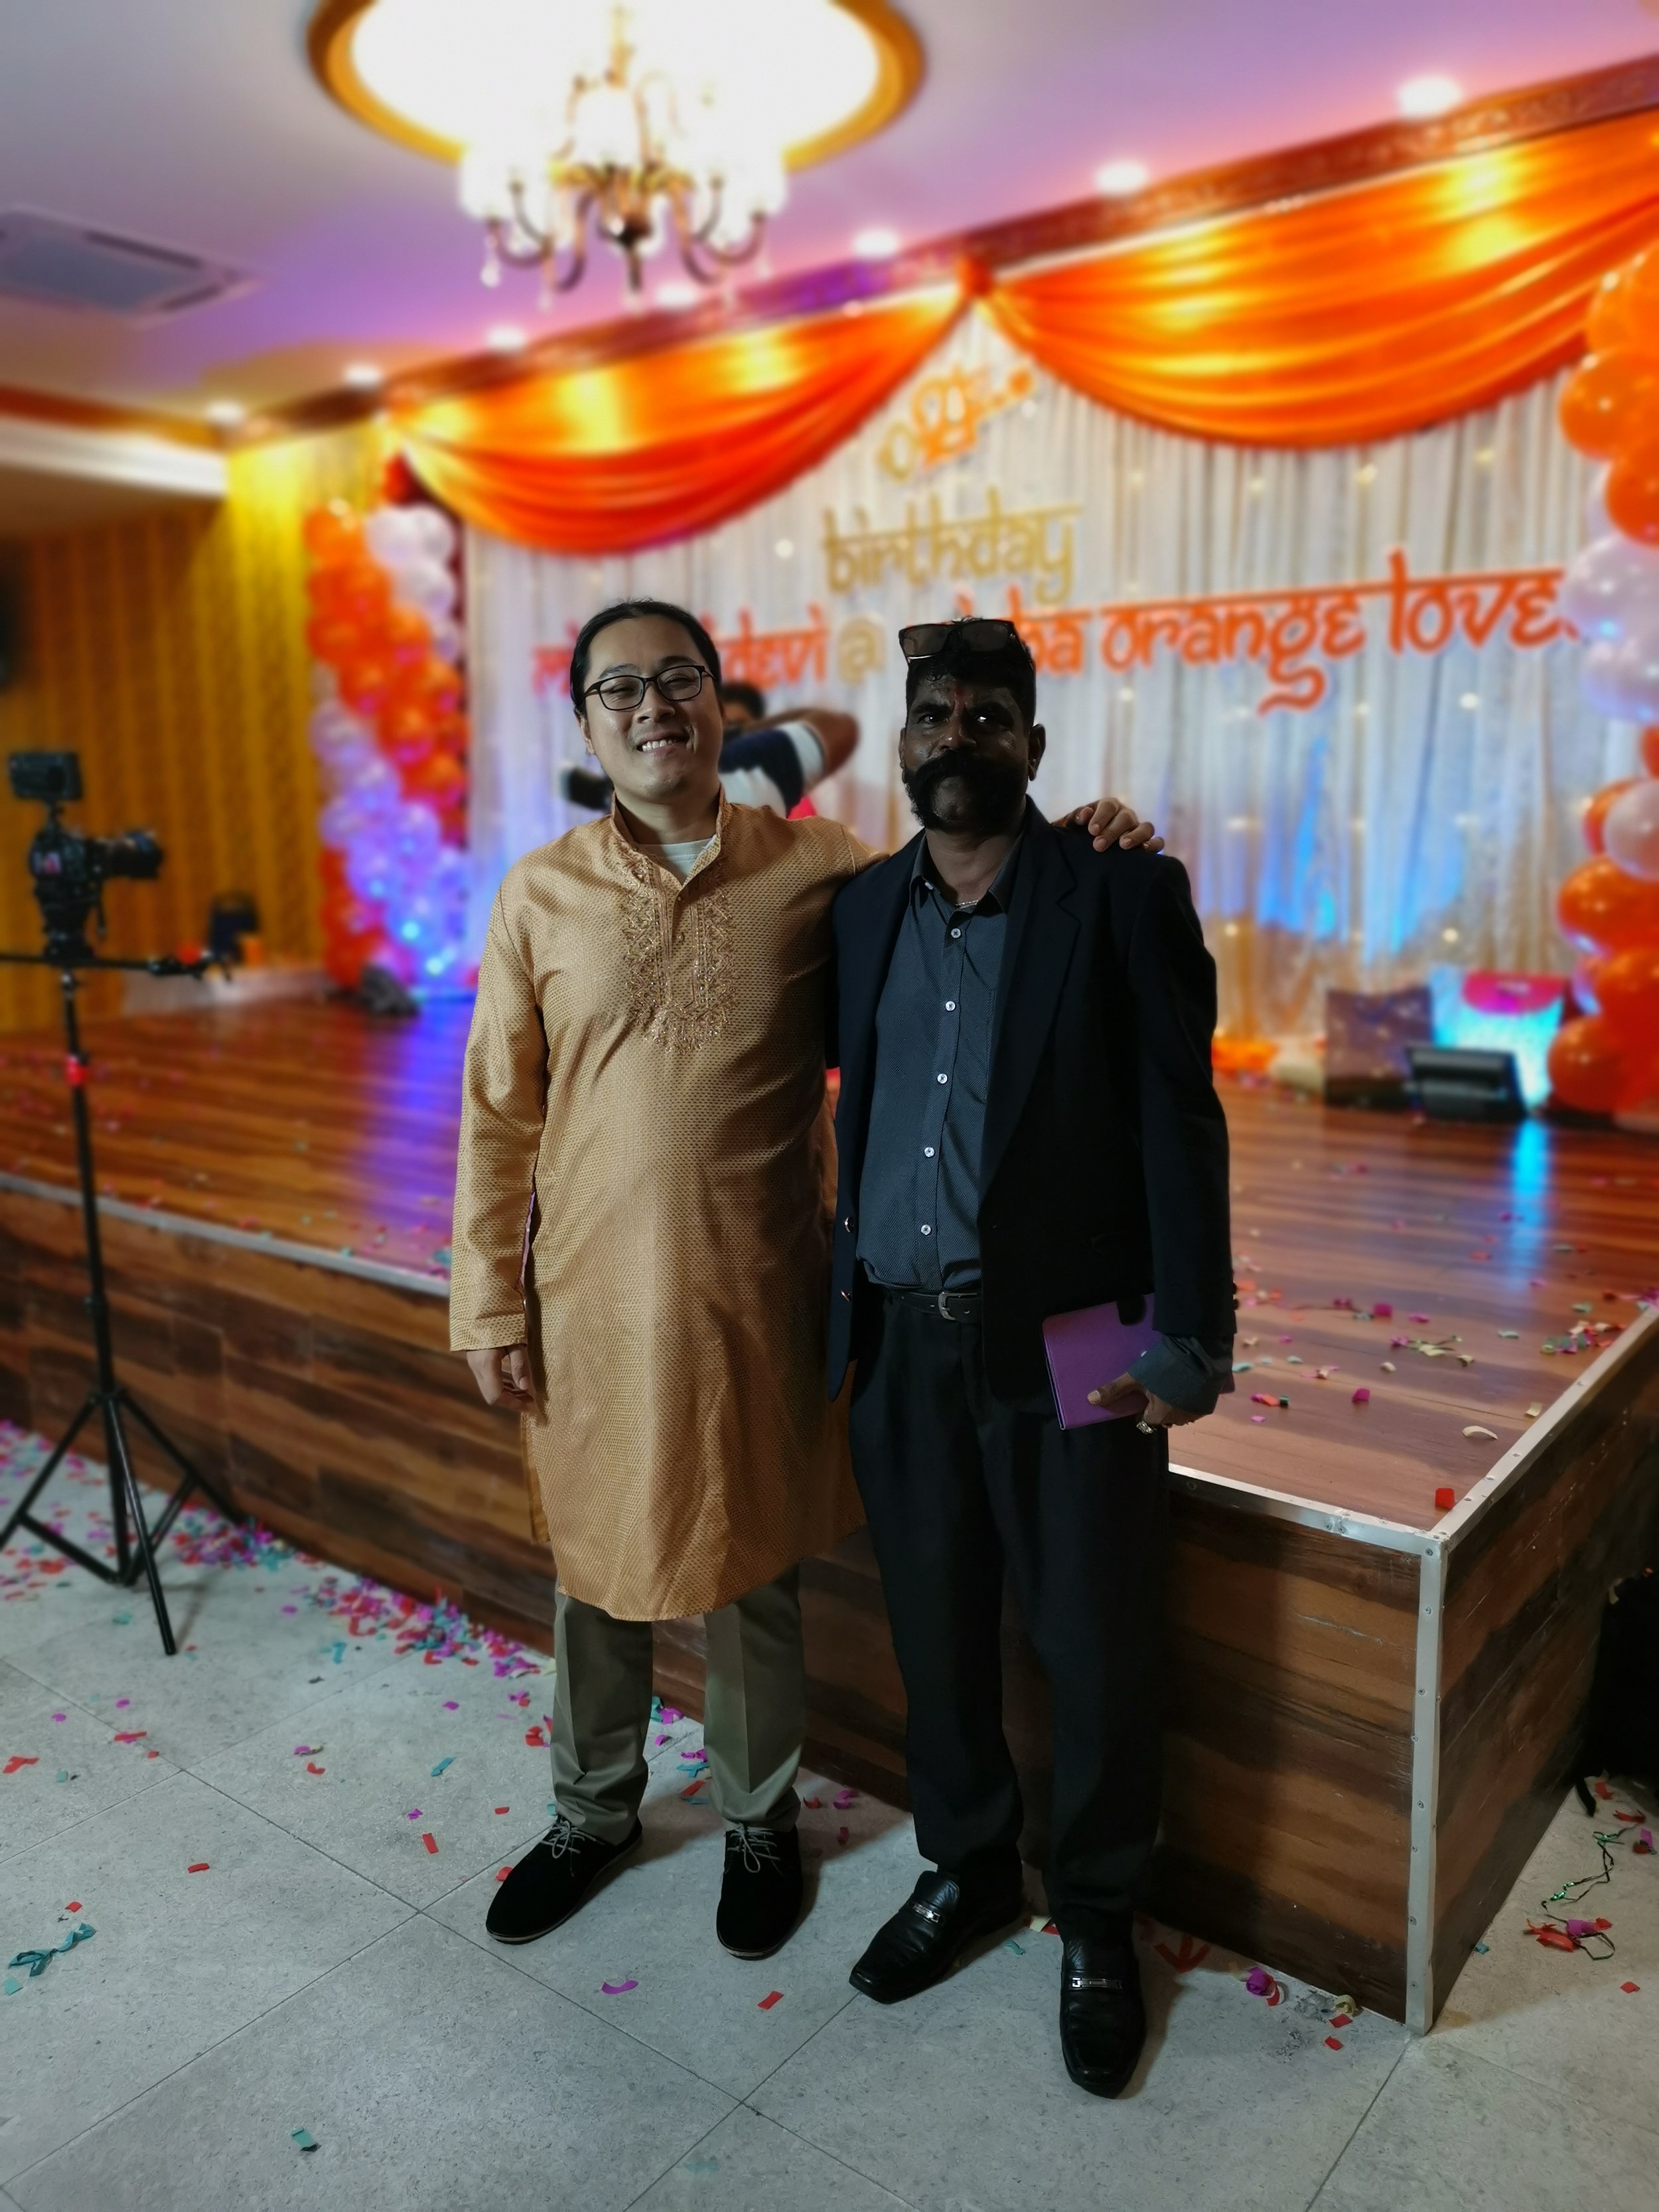 Mishalini "Orange Lover" Birthday Party (2019)